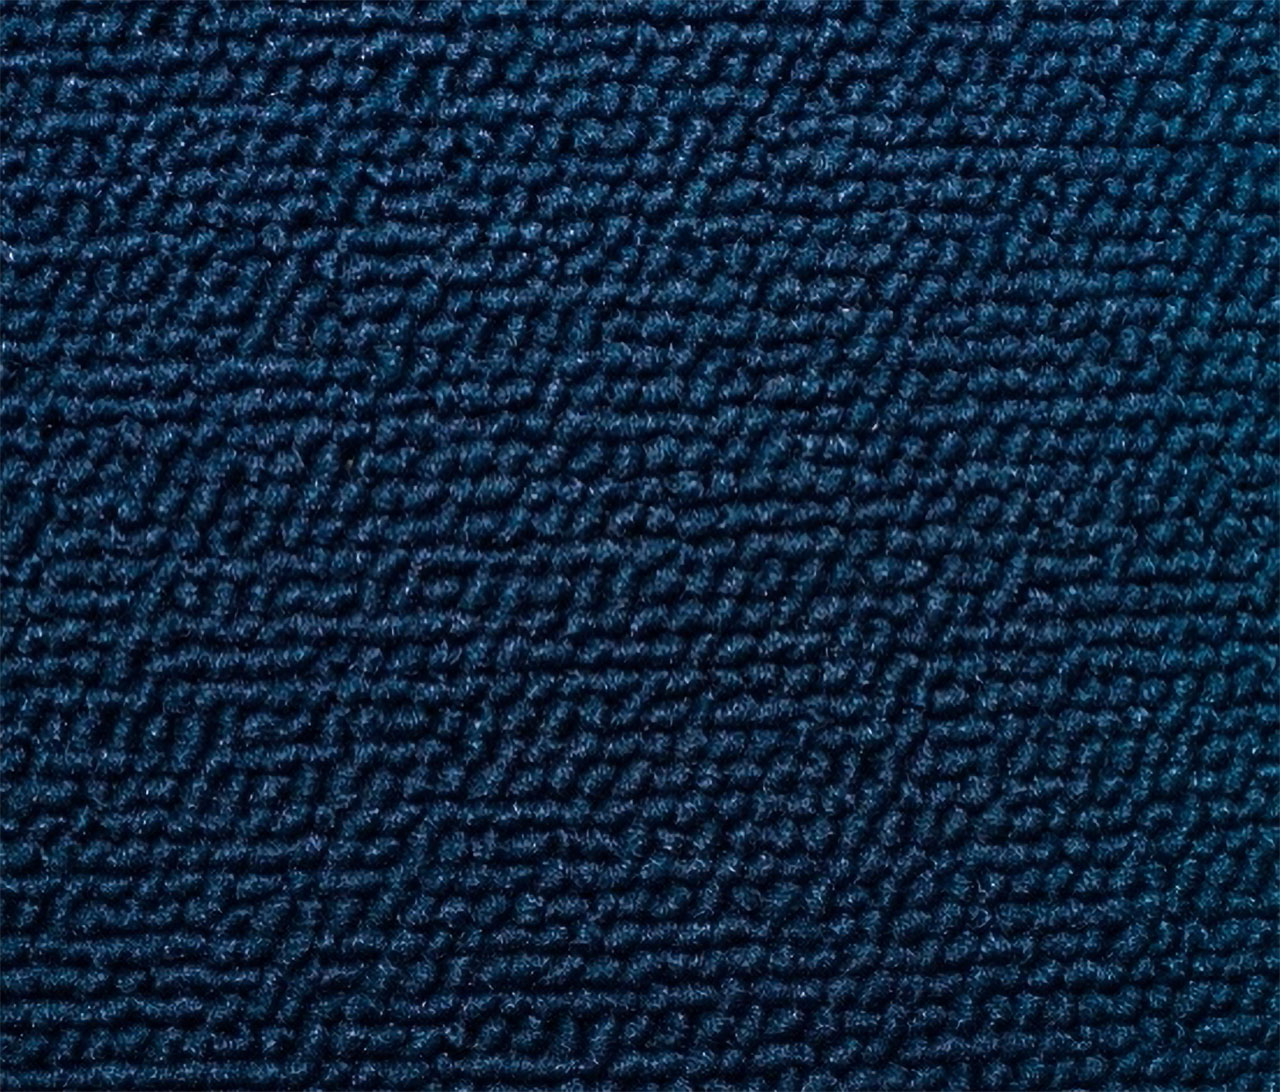 Holden Standard EH Standard Sedan C17 Columbine Blue Carpet (Image 1 of 1)